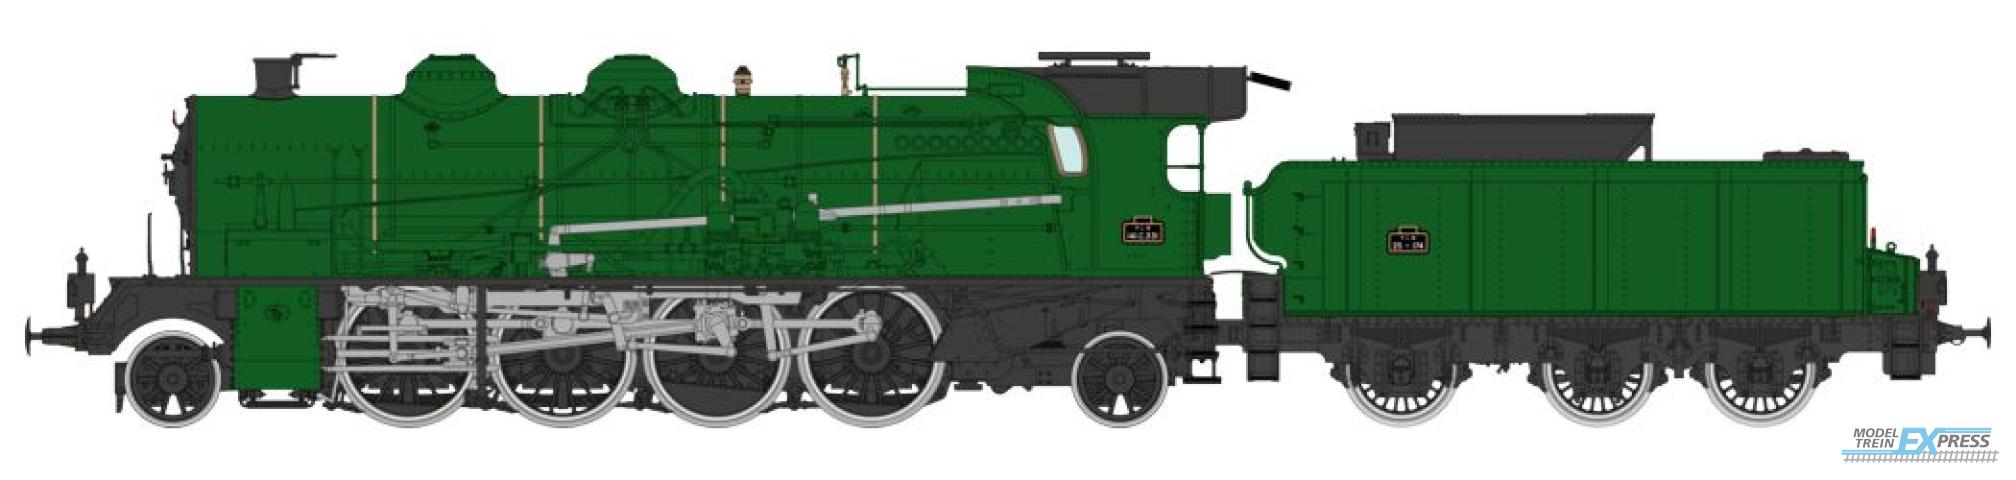 REE models MB-157S 141 C 331 + Tender 25-174 Green PLM Era II - DCC SOUND & Smoke